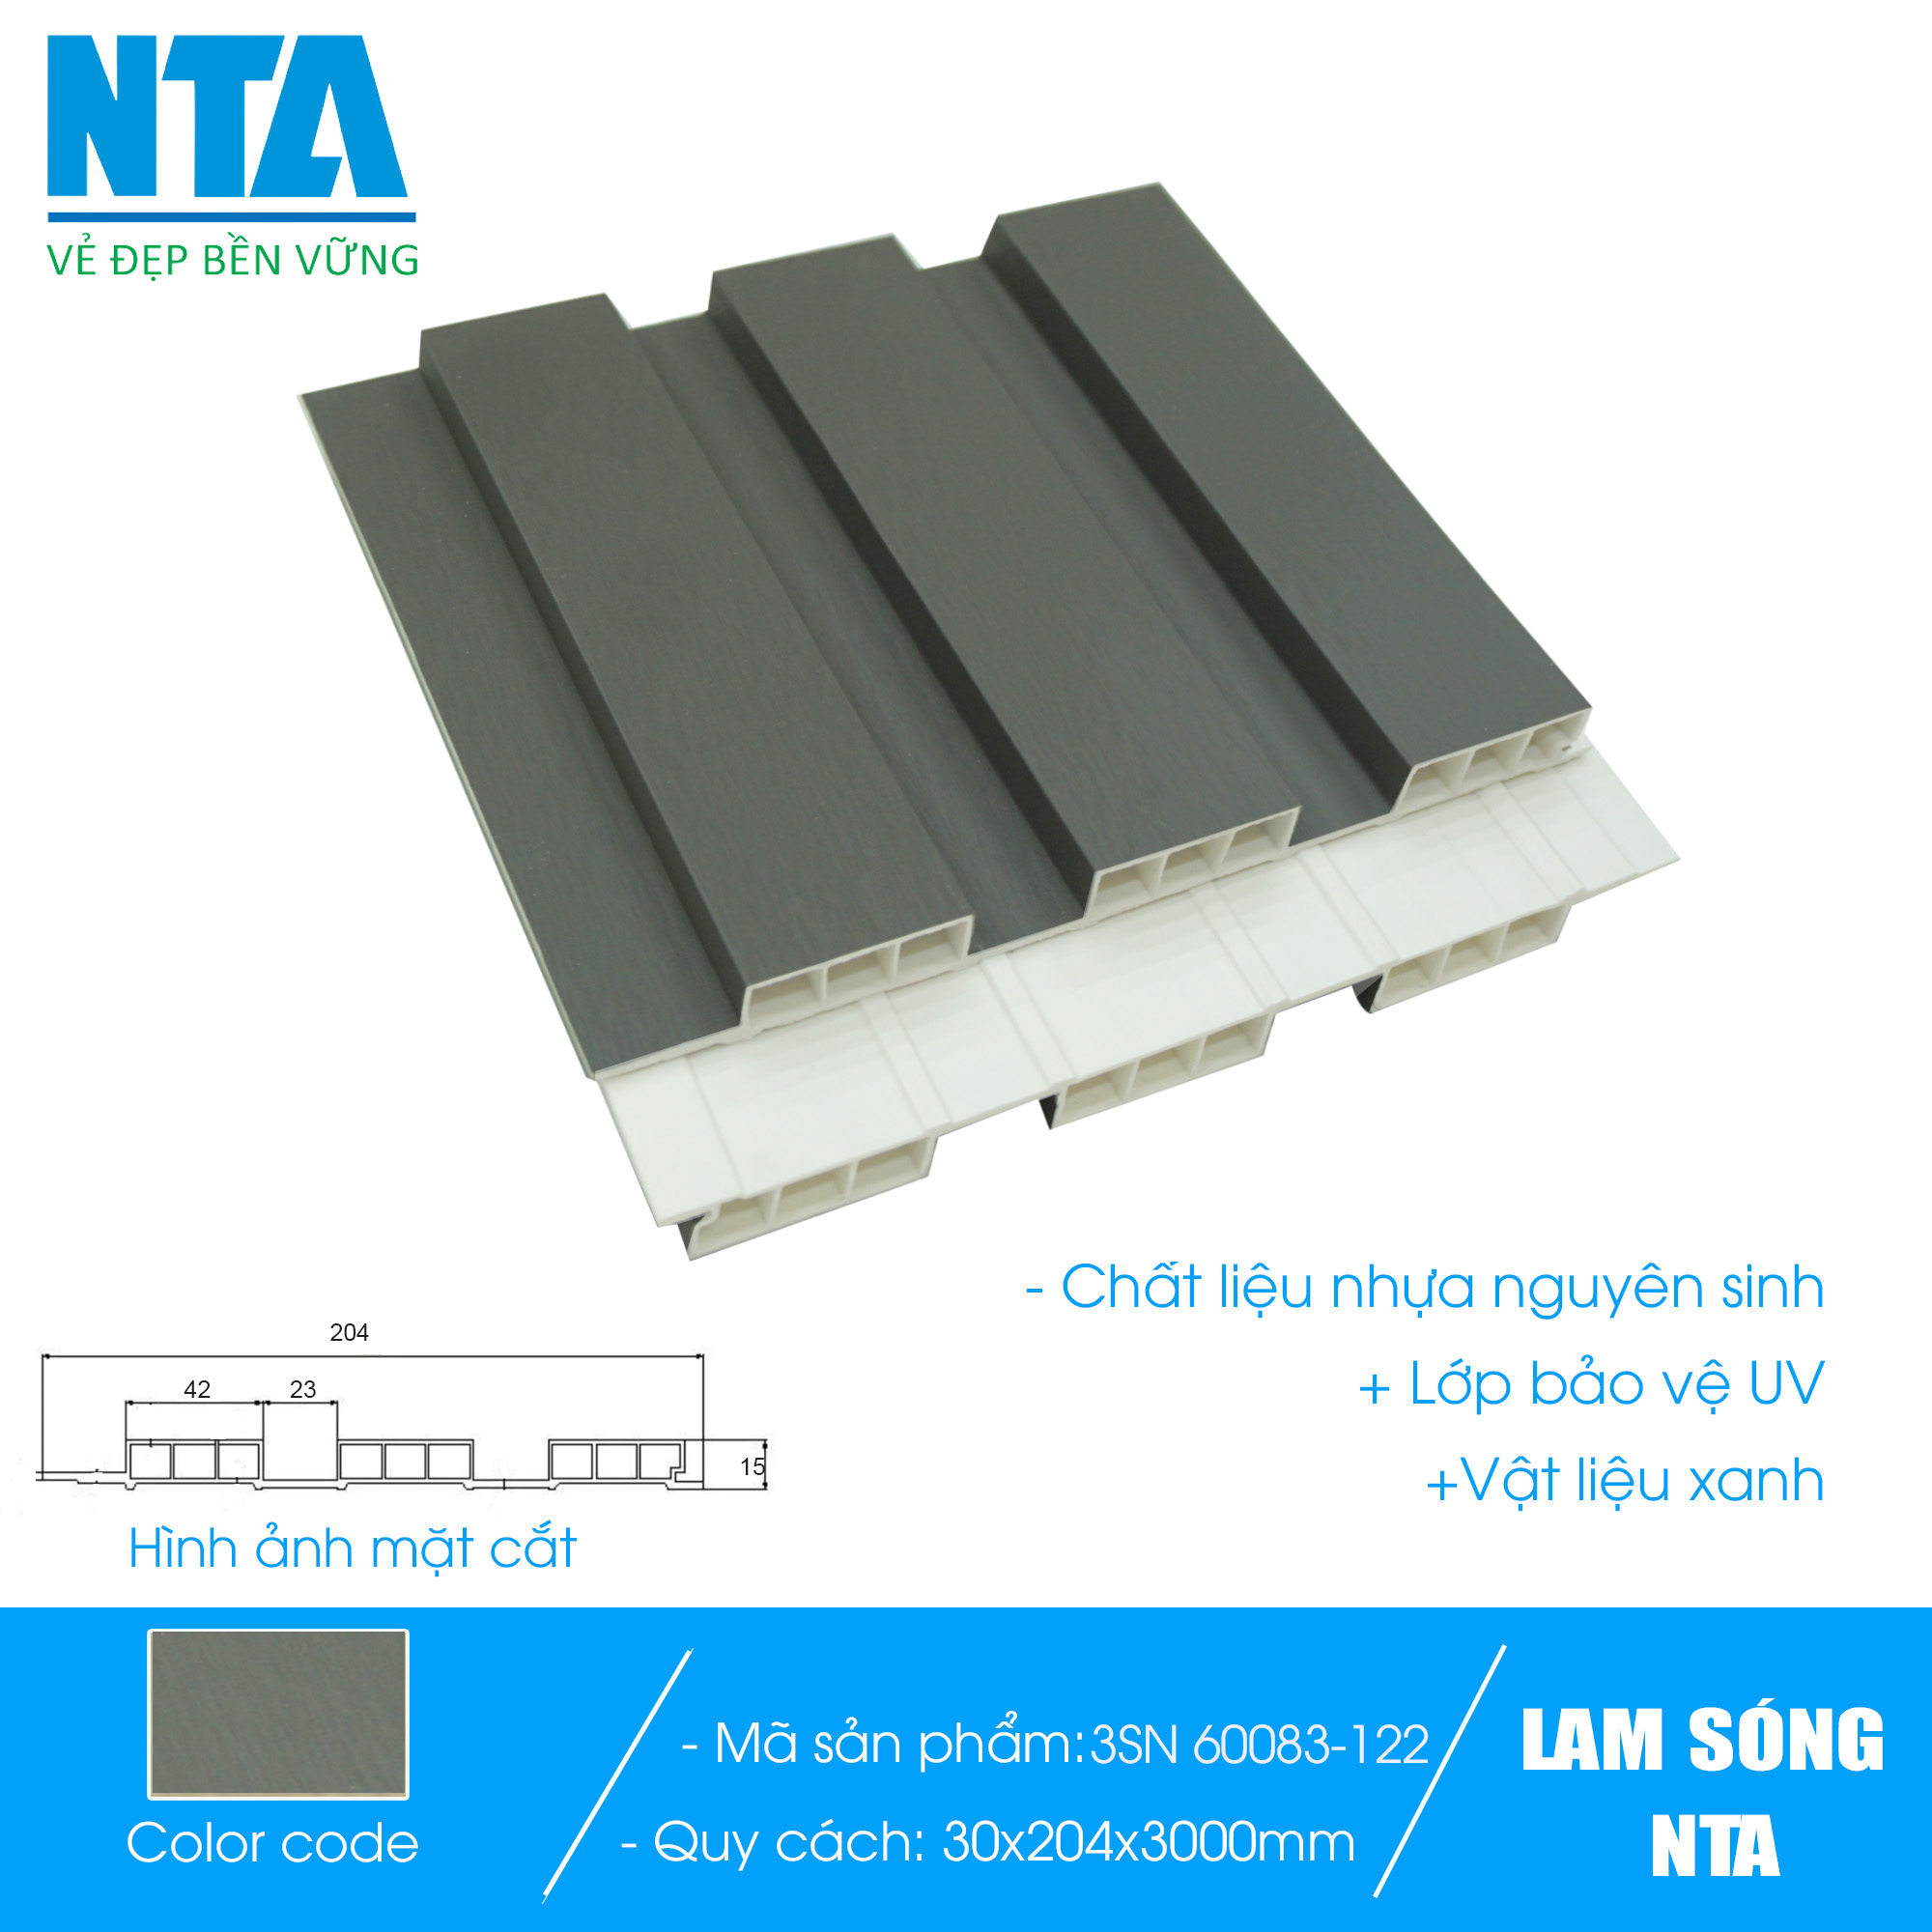 3-small louver panels NTA-60083-122